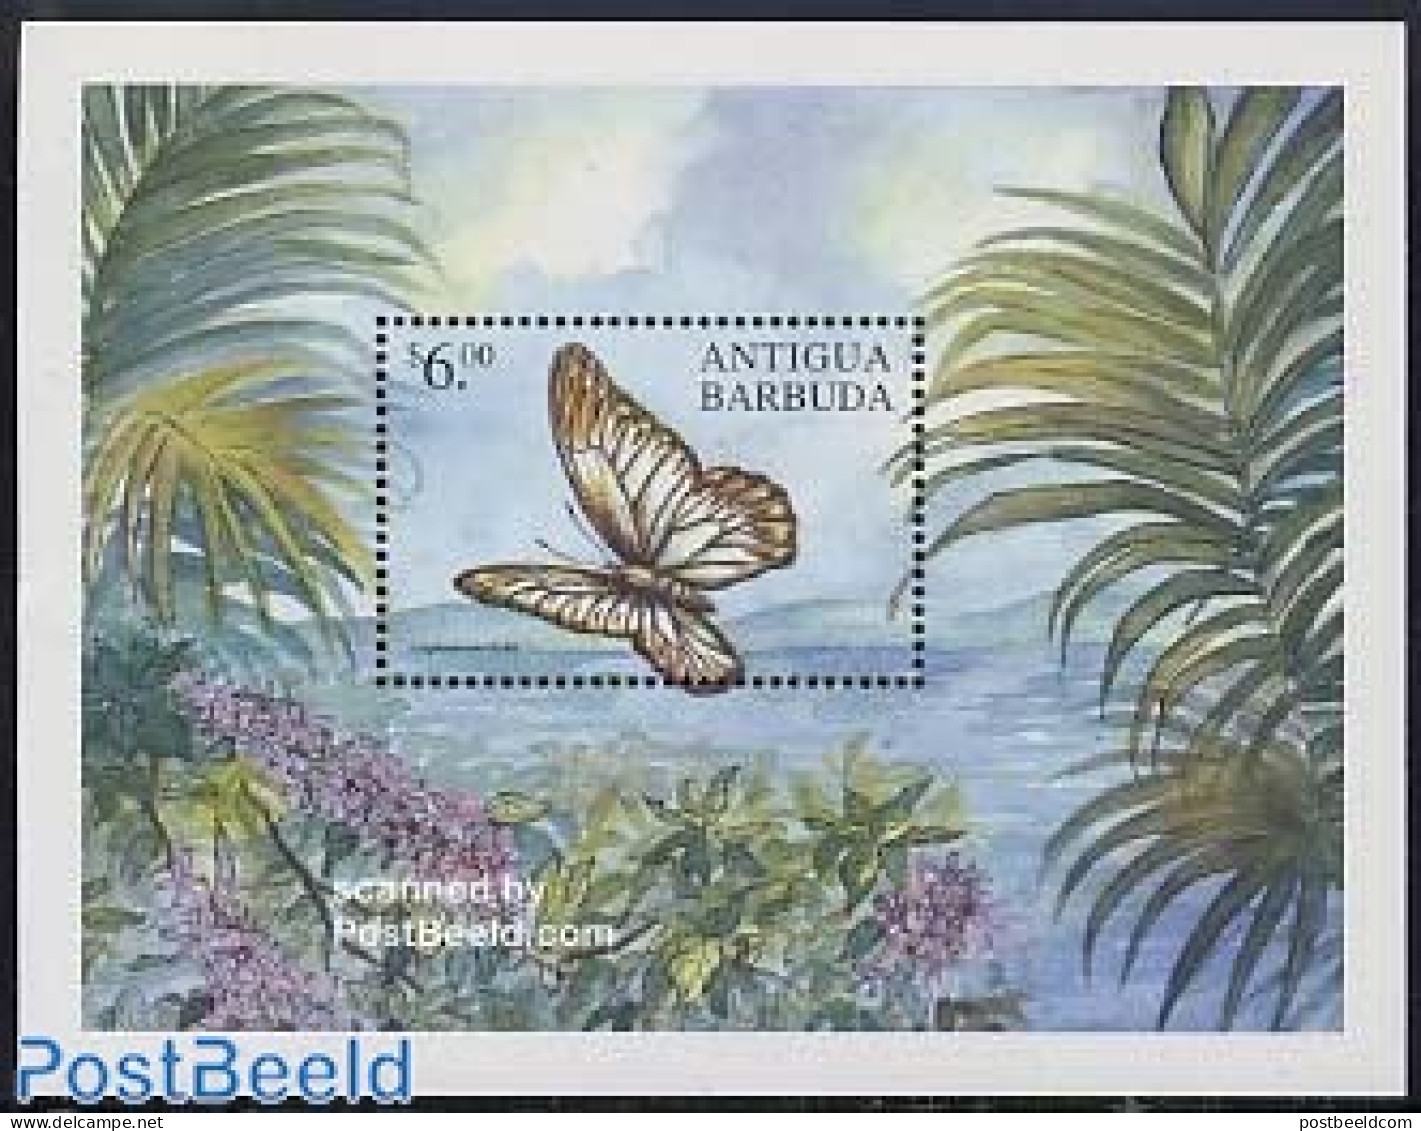 Antigua & Barbuda 2000 Butterfly S/s, Graphium Encelades, Mint NH, Nature - Butterflies - Antigua Und Barbuda (1981-...)